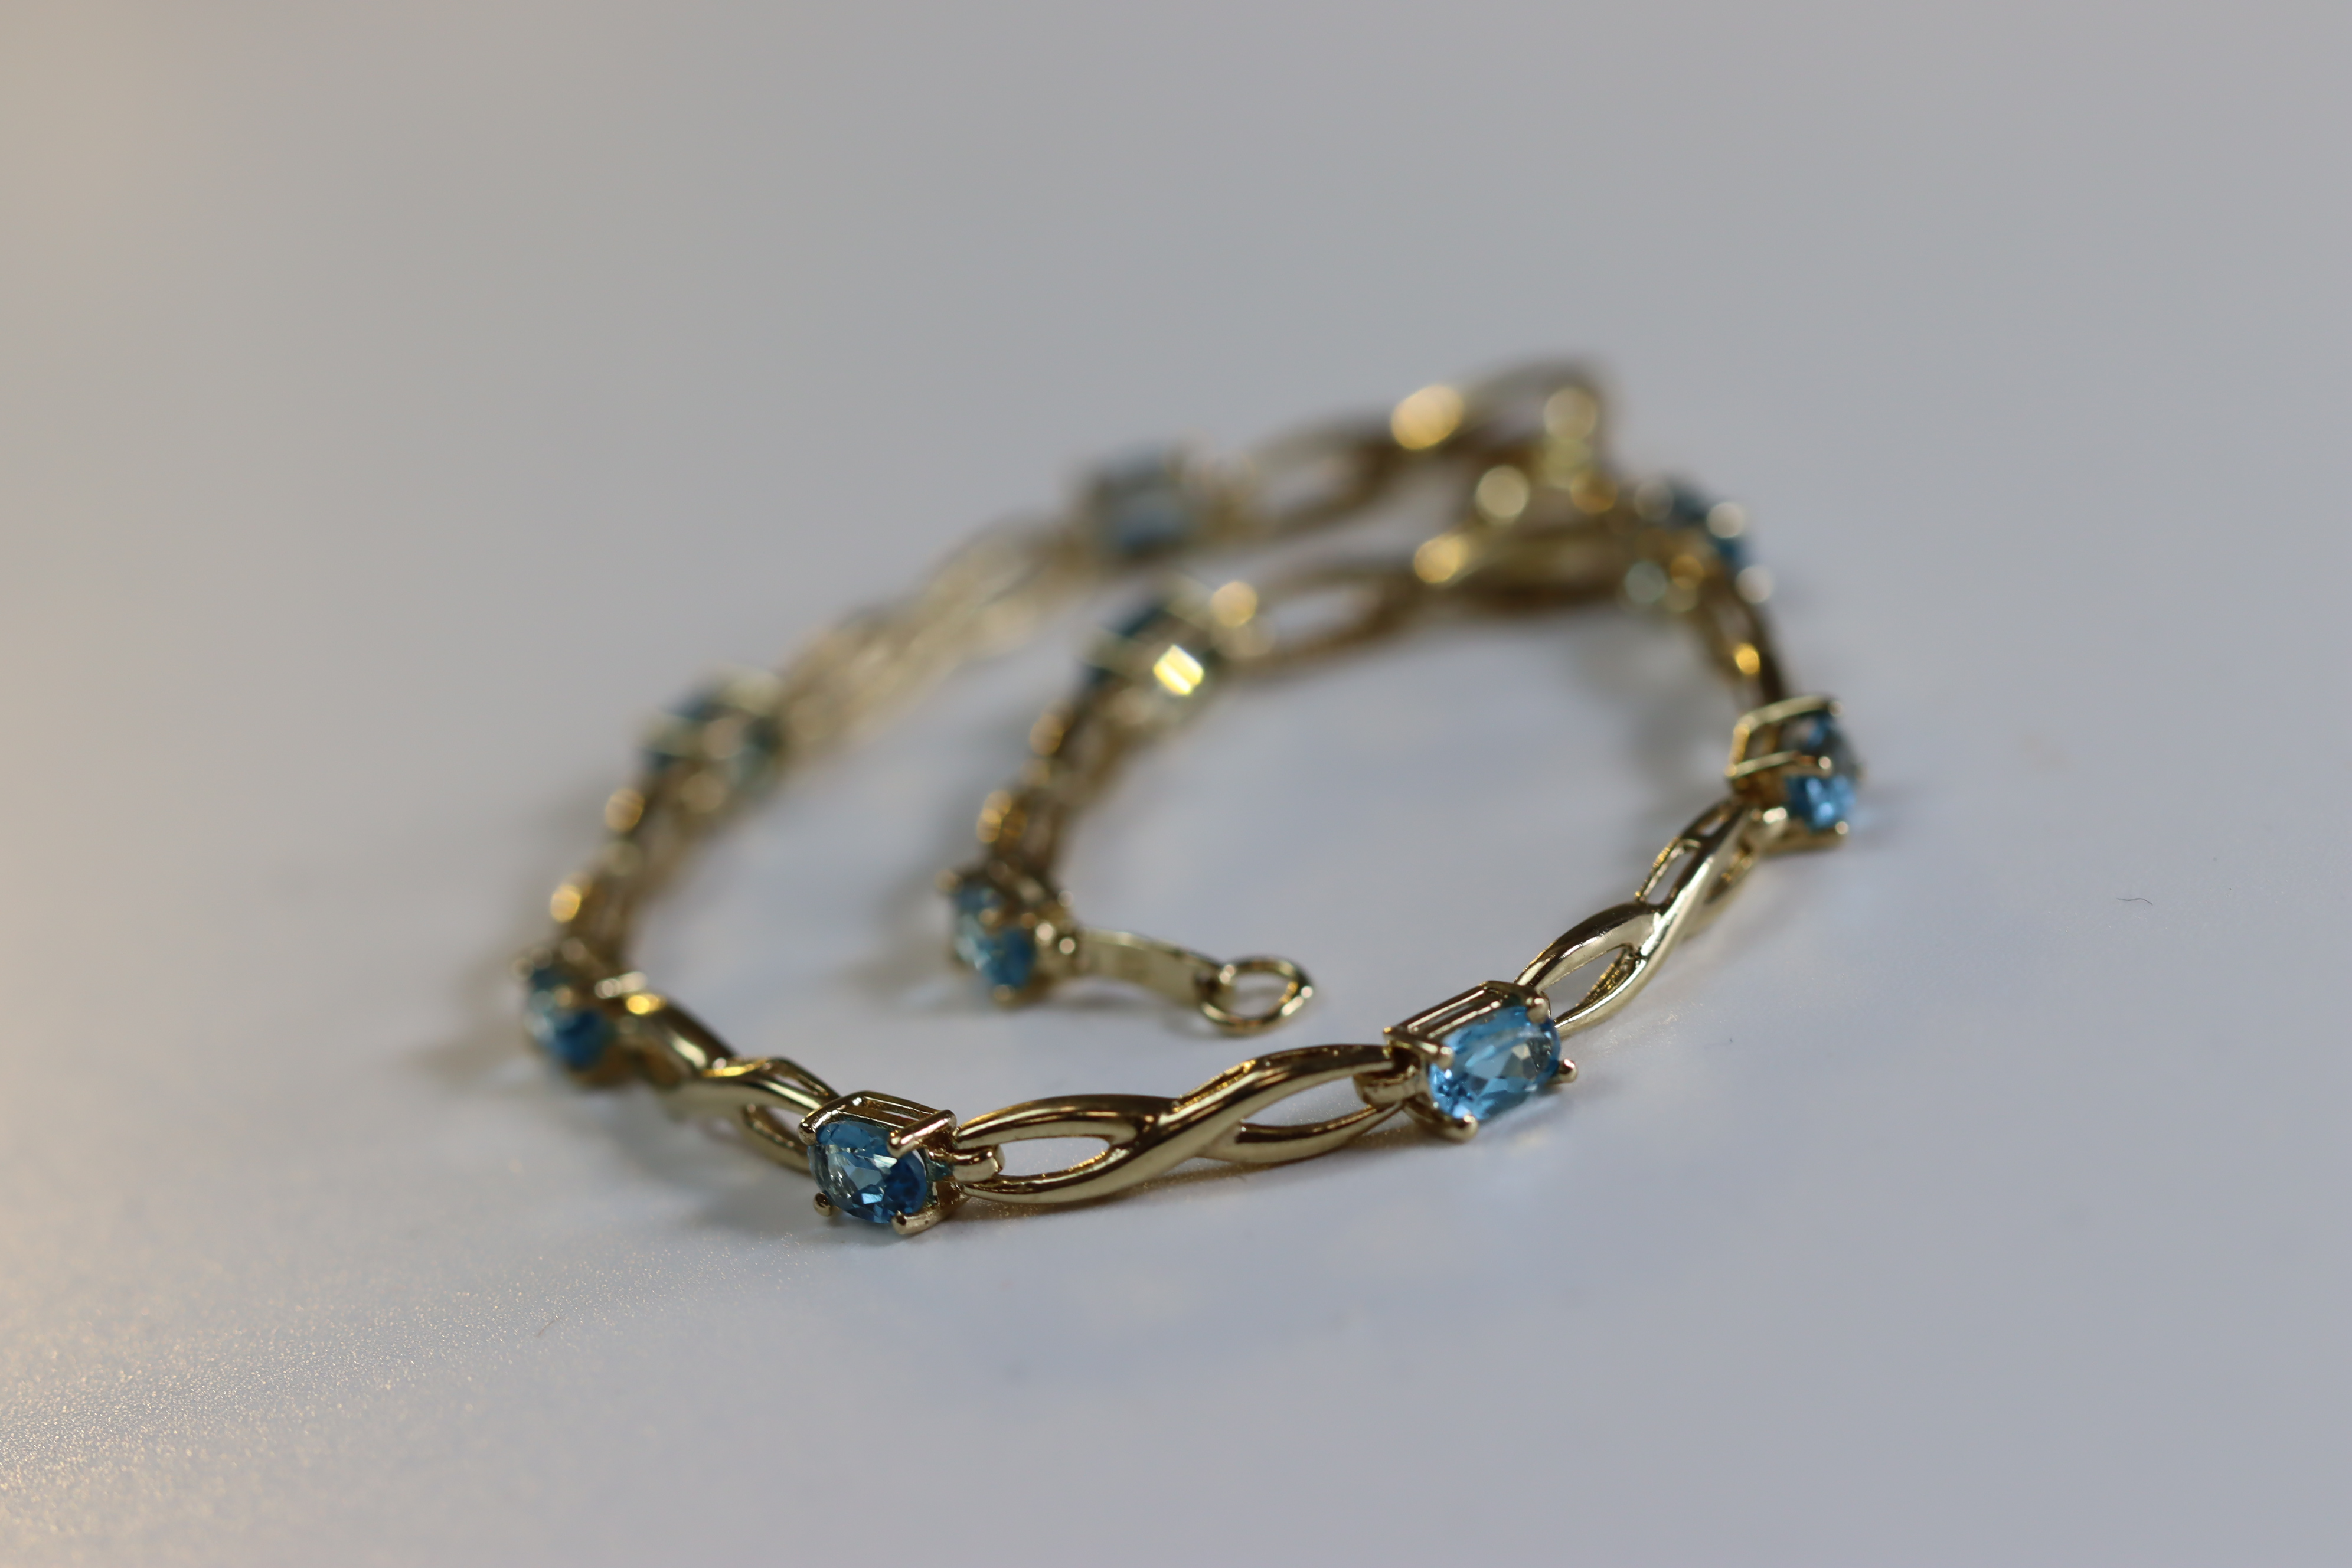 A Blue Topaz and Yellow Metal Line Bracelet A Blue Topaz and Yellow Metal Line Bracelet, set with